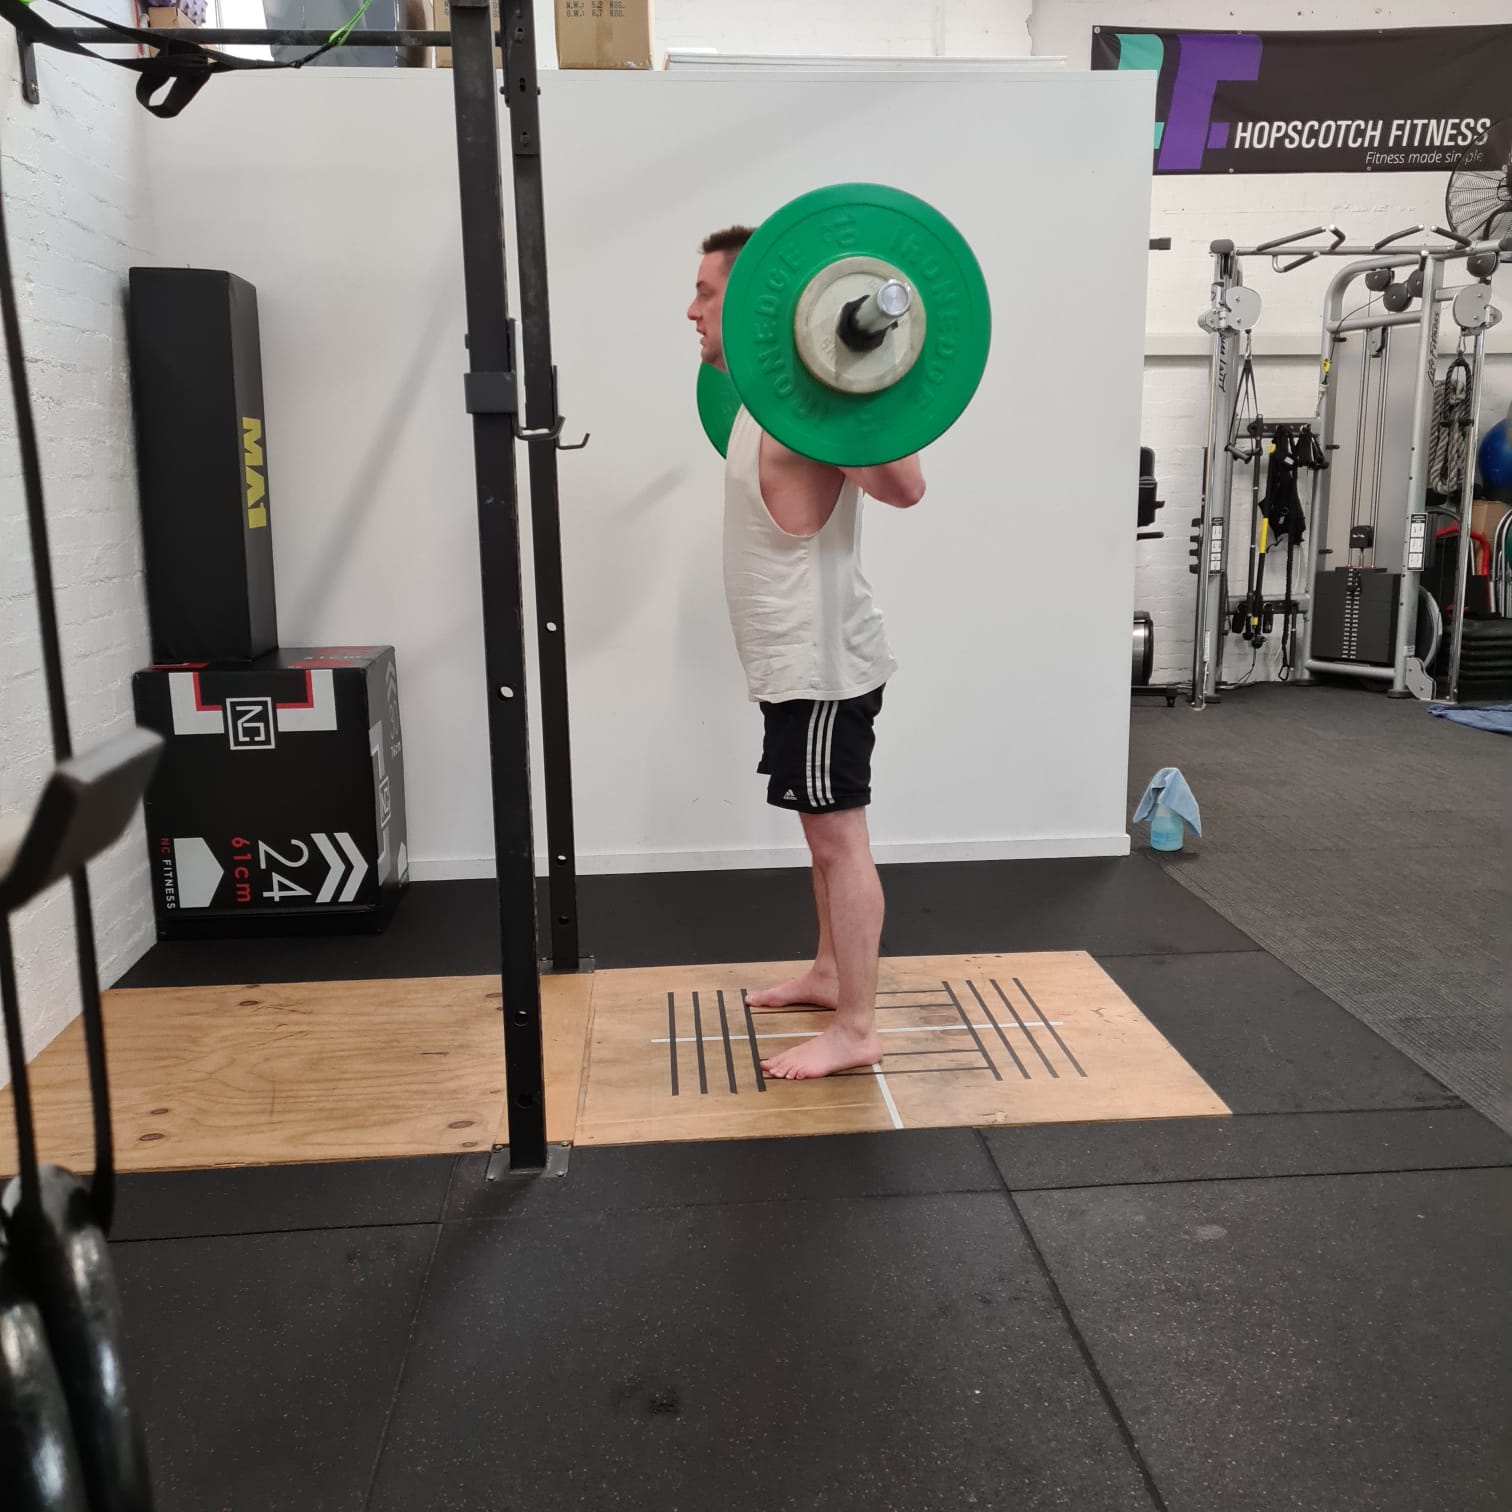 Personal training session hitting the squat rack. Hopscotch Fitness Burwood (03) 9808 6942